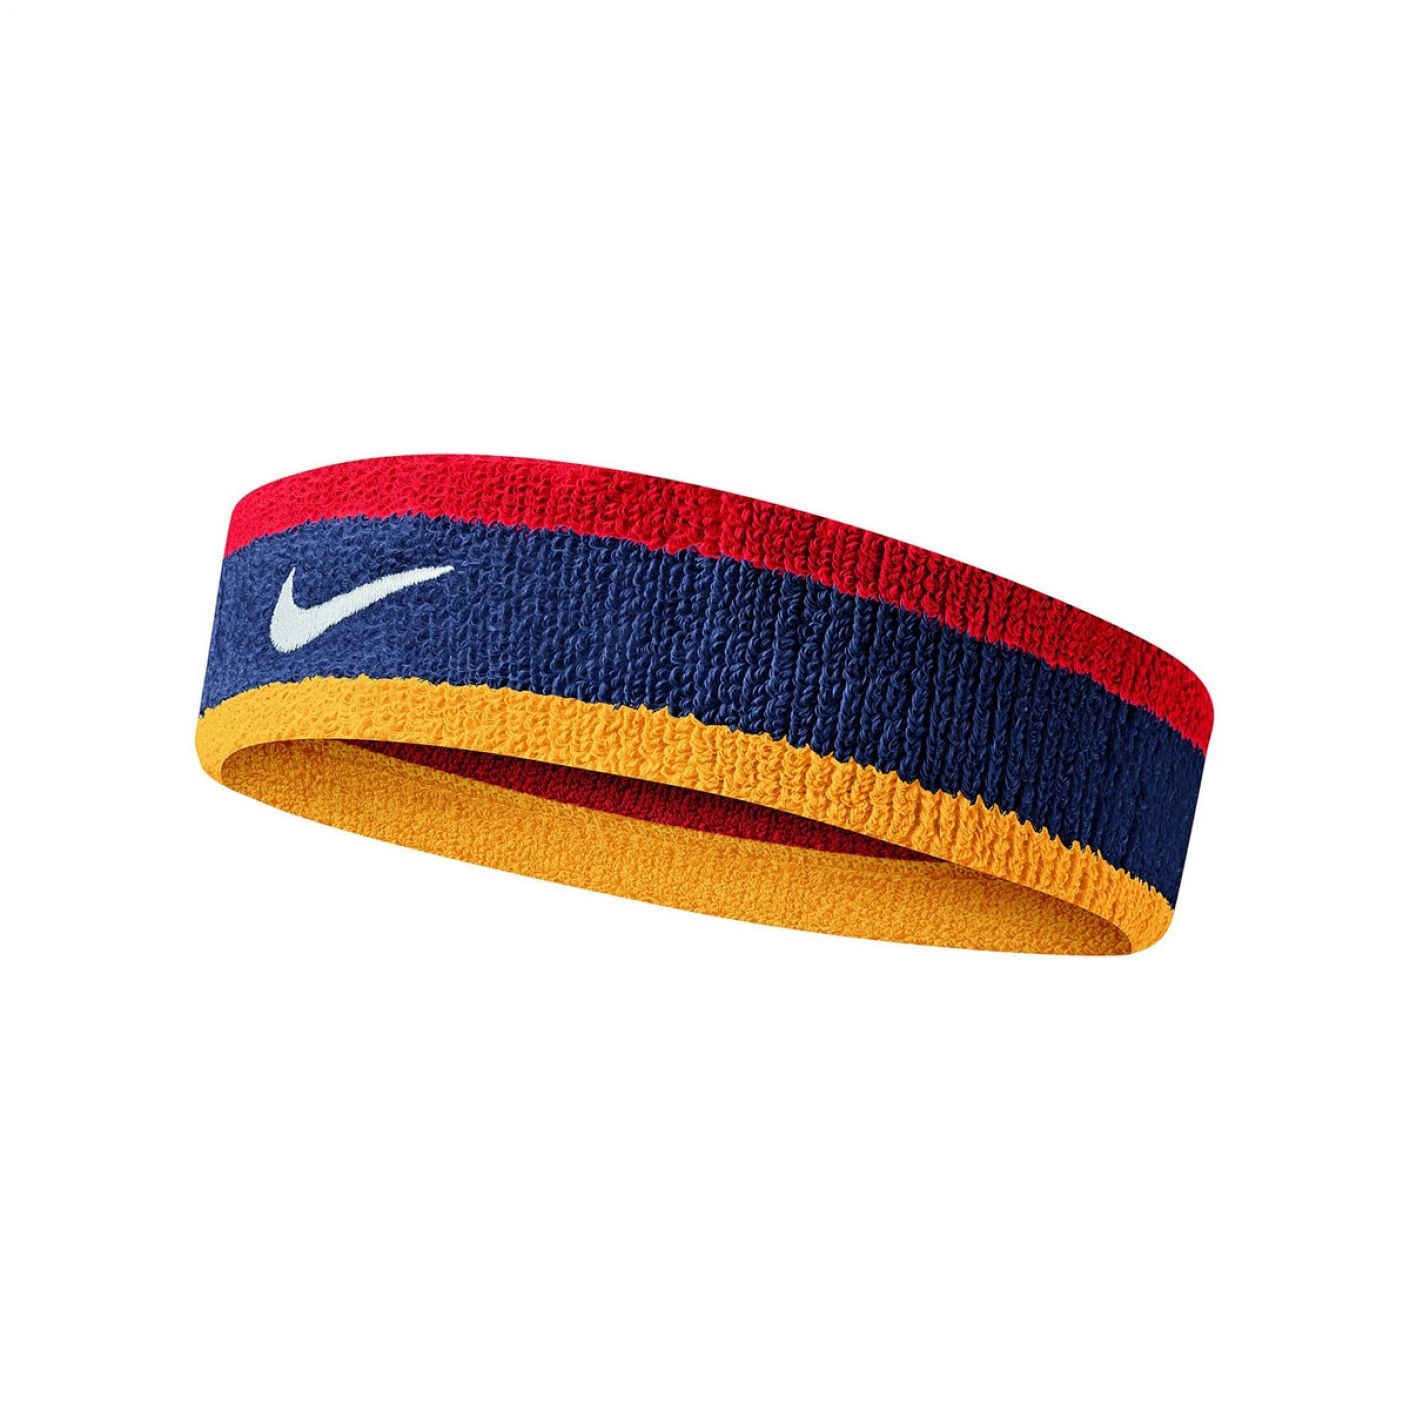 Nike Swoosh Headband Headband Red Blue Yellow